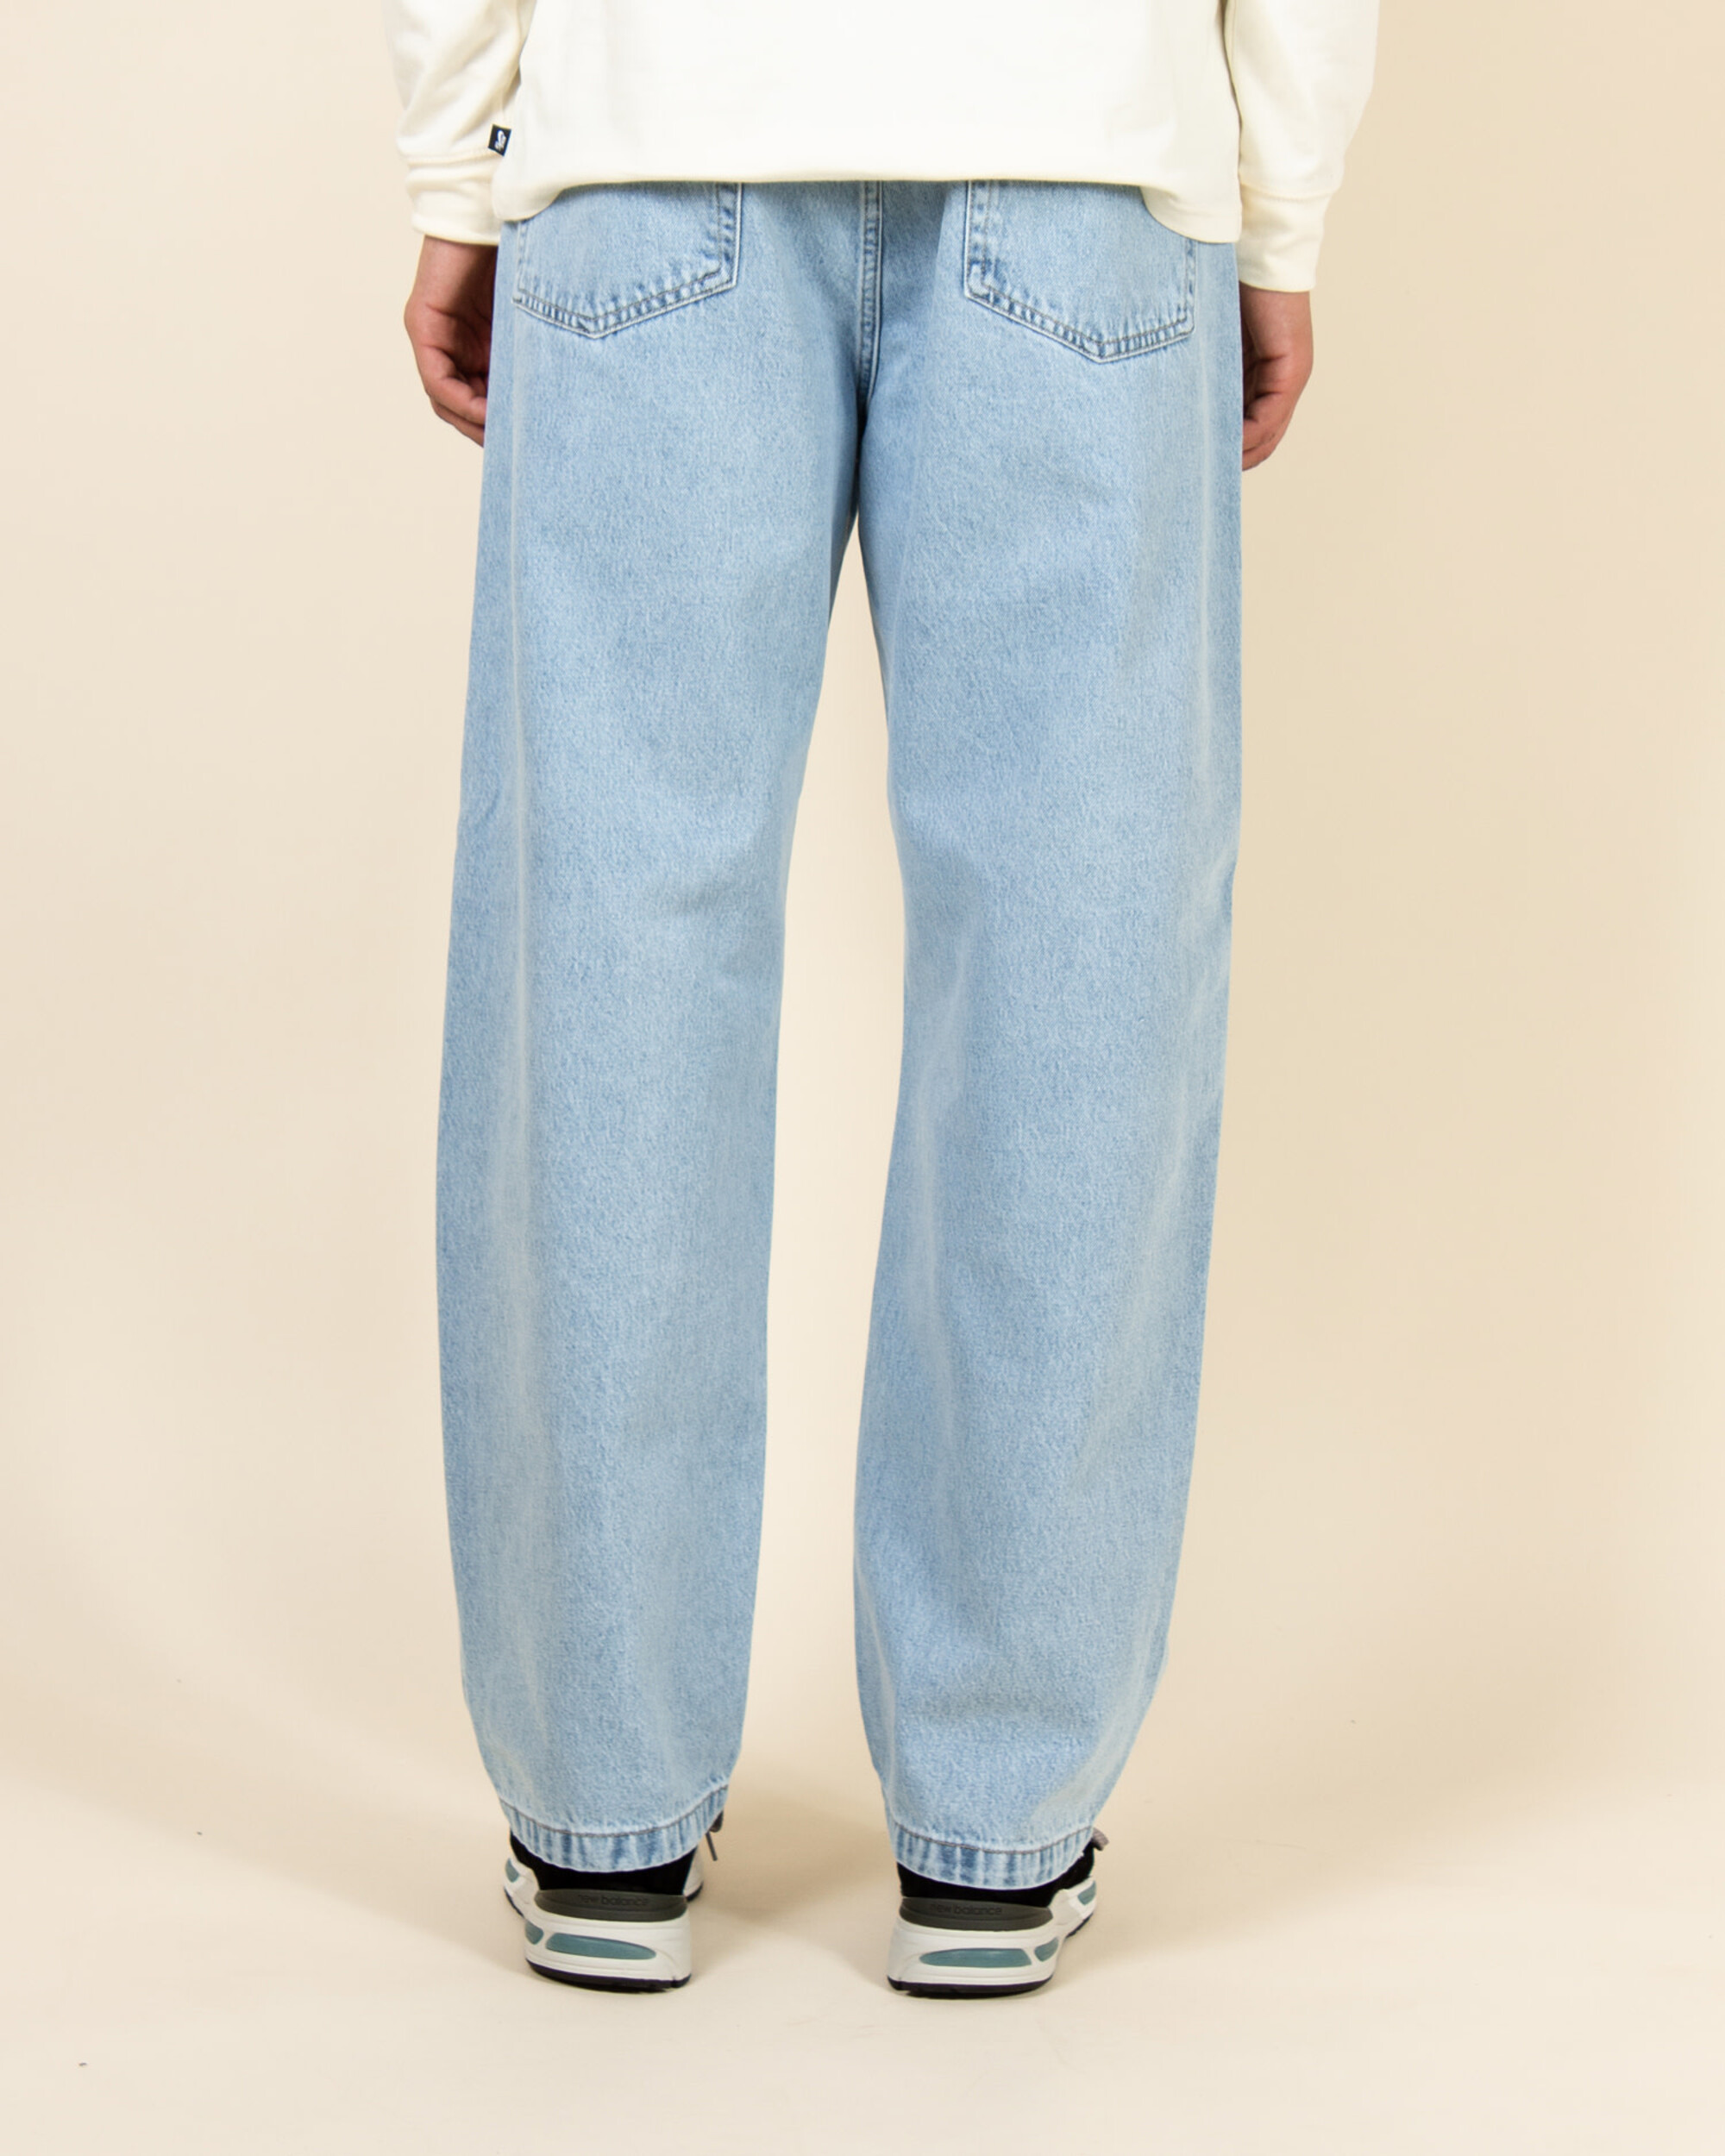 Carhartt WIP - Landon Bleached Blue - Jeans